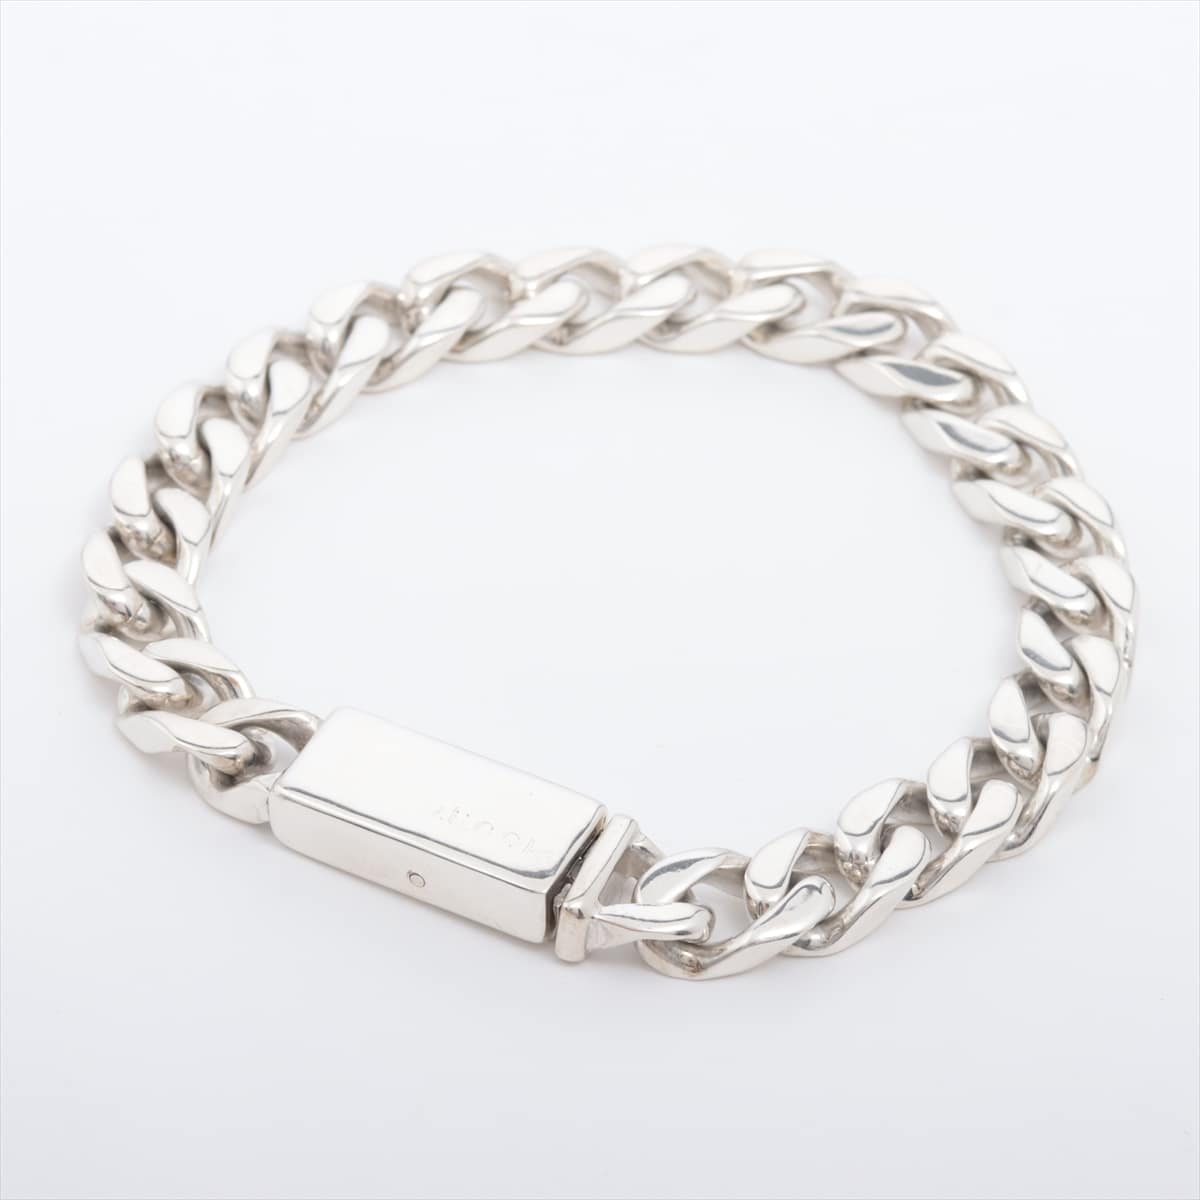 Gucci Bracelet 925 40.0g Silver